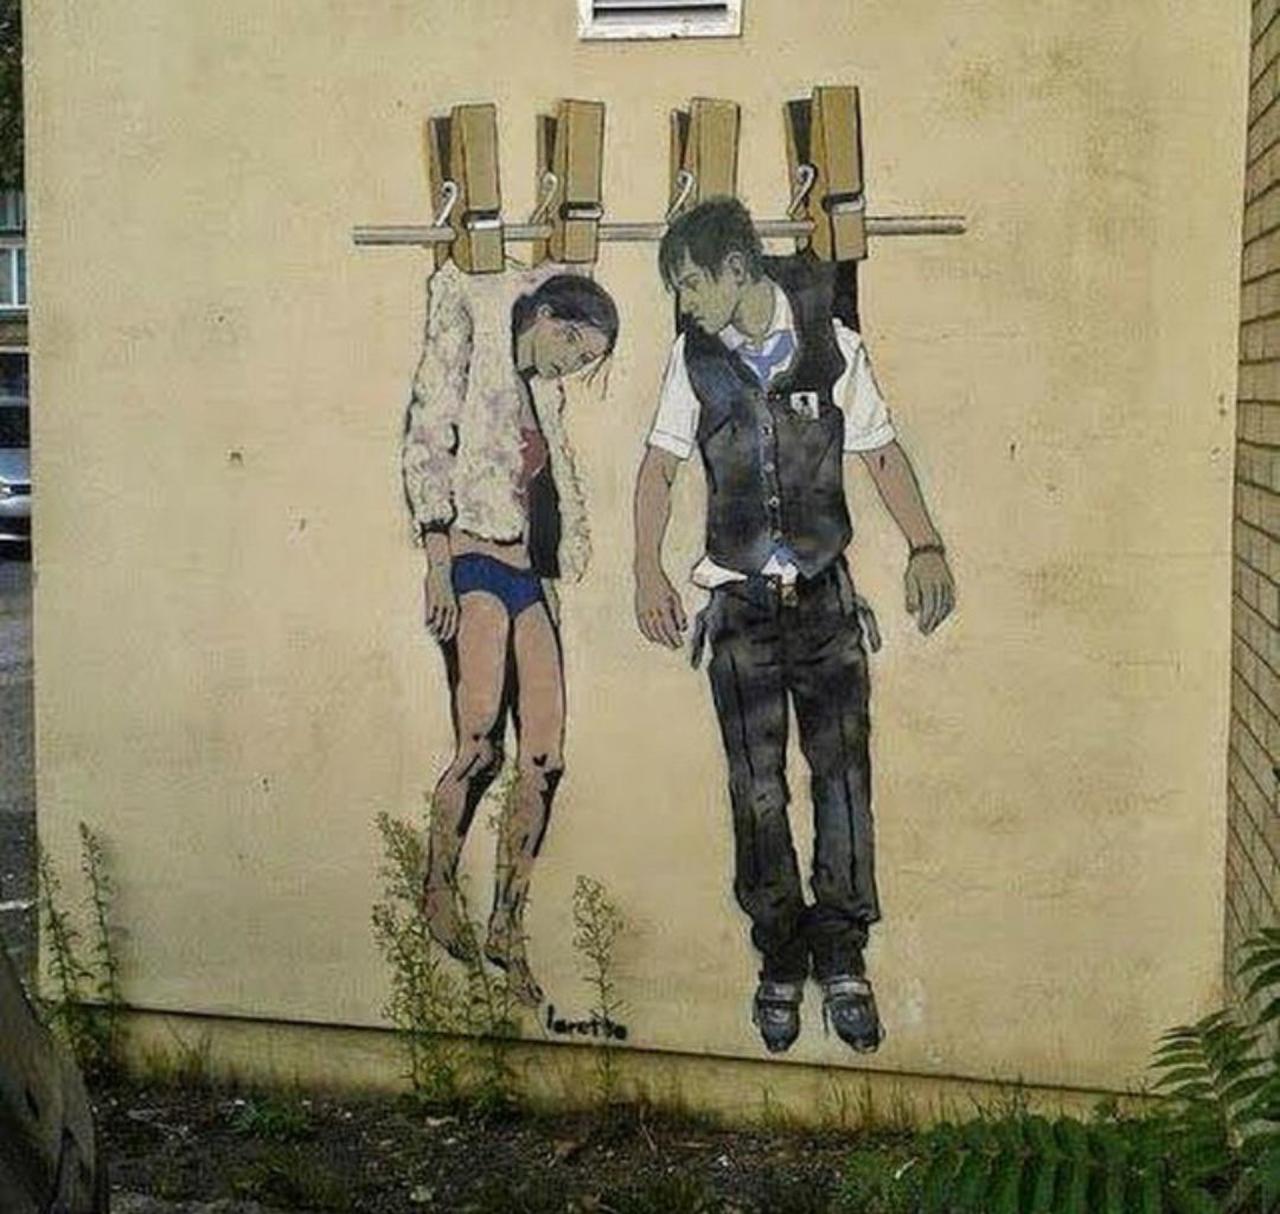 “@hypatia373: #art #streetart #graffiti http://t.co/axfWpWxkJs”